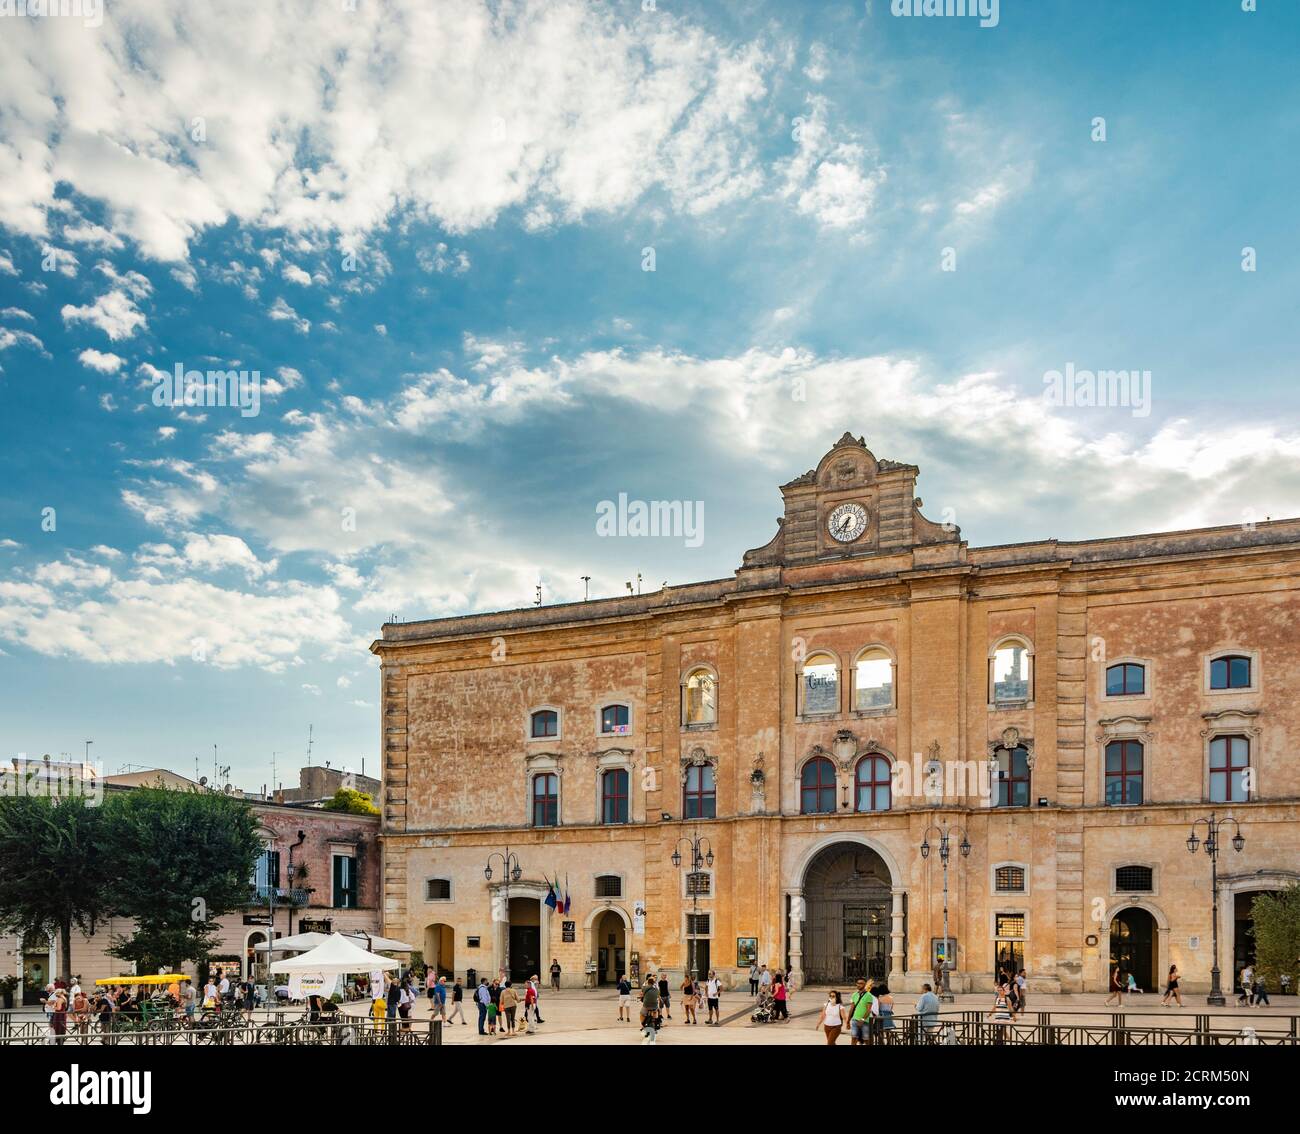 August 8, 2020 - Matera, Basilicata, Italy - Palazzo dell'Annunziata, an eighteenth-century palace located in Piazza Vittorio Veneto. Many tourists st Stock Photo